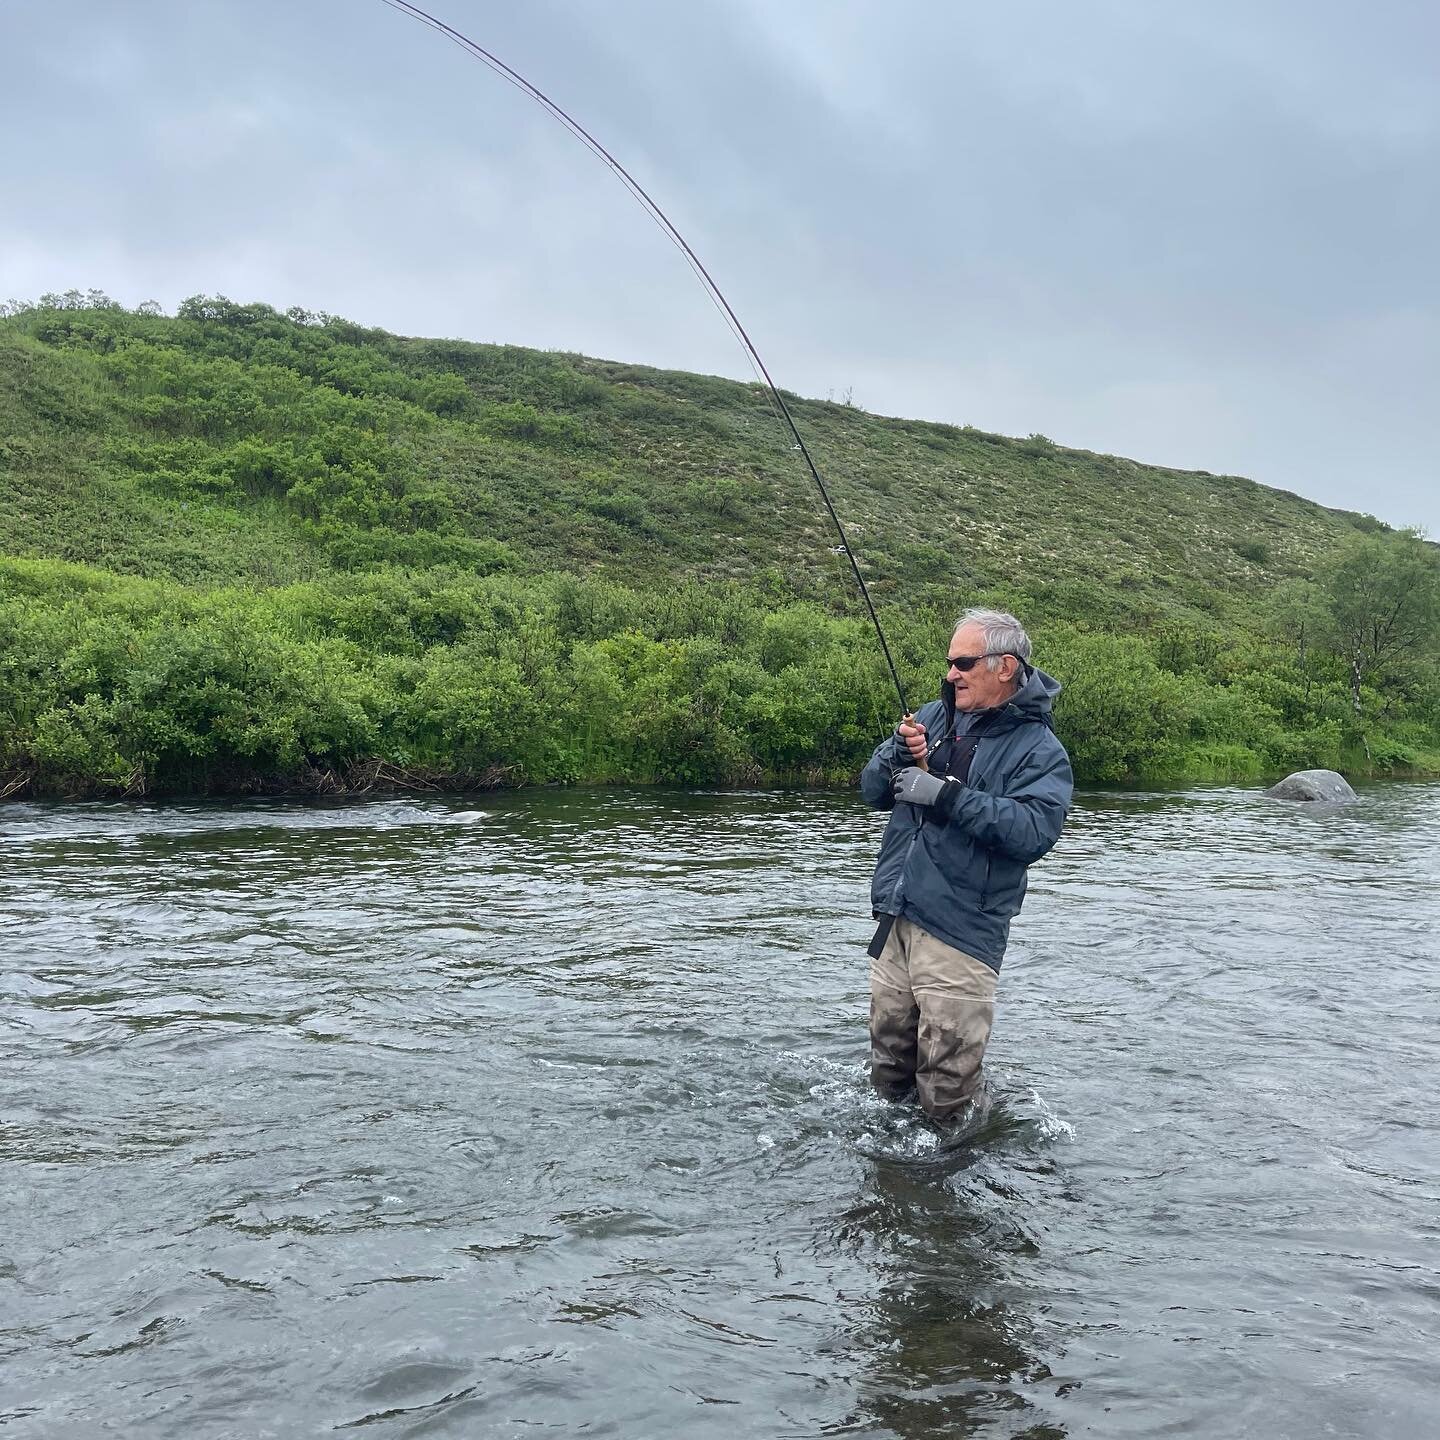 Great summer of fishing the Kanektok!
#kanektok #kanektokriver #riverrafting #flyfishing #alaskaflyfishing #keepemwet #catchandrelease #silversalmon #alaska #salmonfishing #alaskafishing #troutunlimited #ouzel #ouzelexpeditions